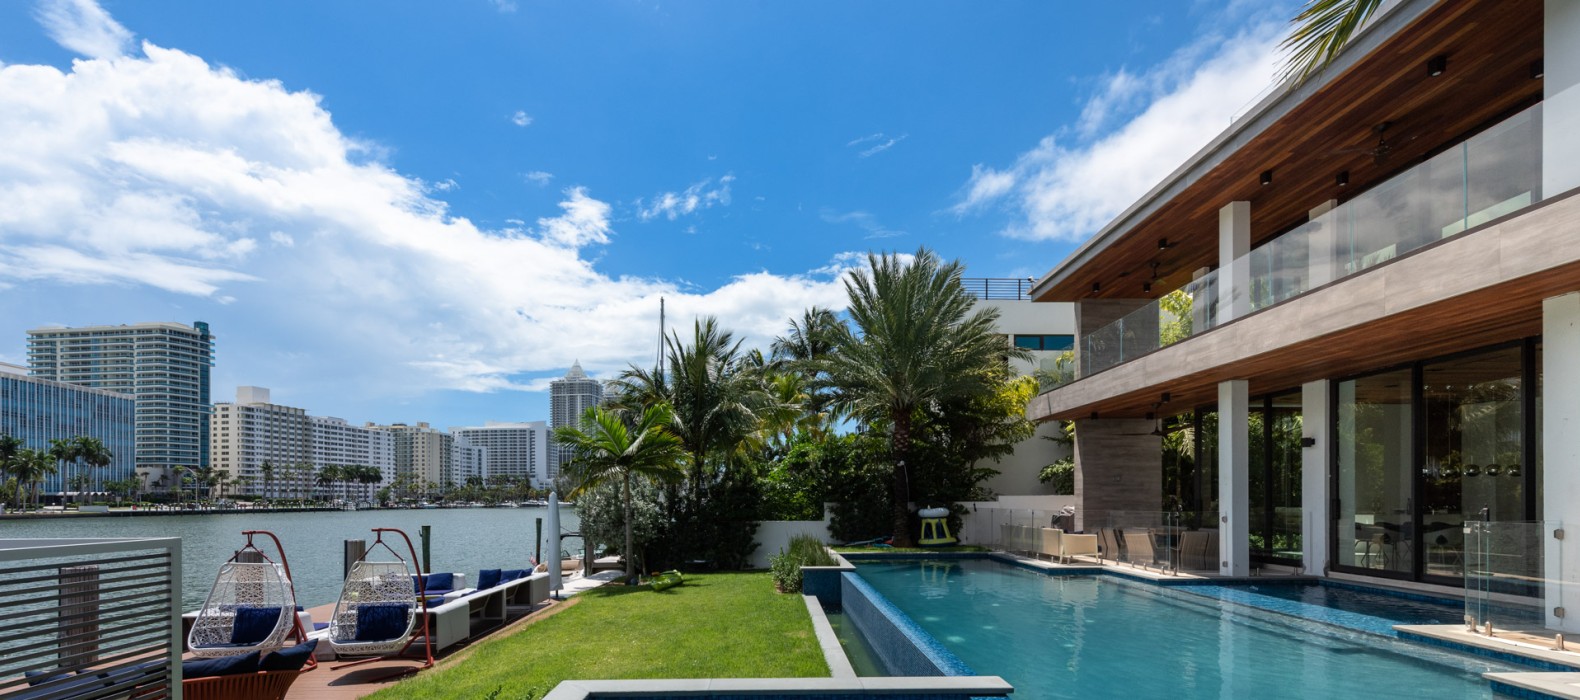 Exterior area of Villa Pamela in Miami